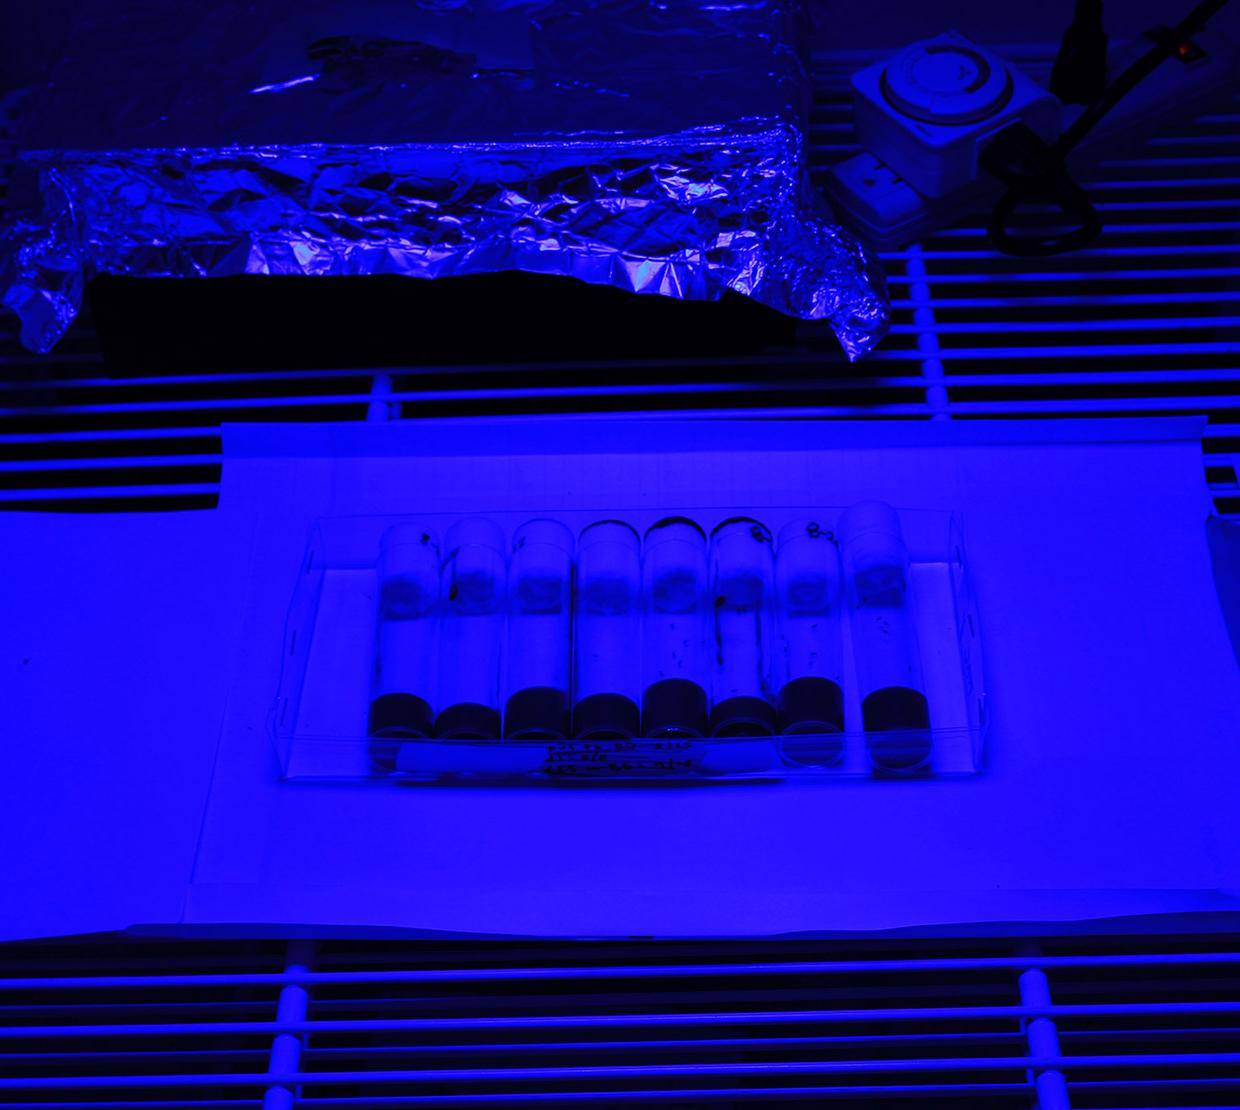 Fruit flies under blue light in lab